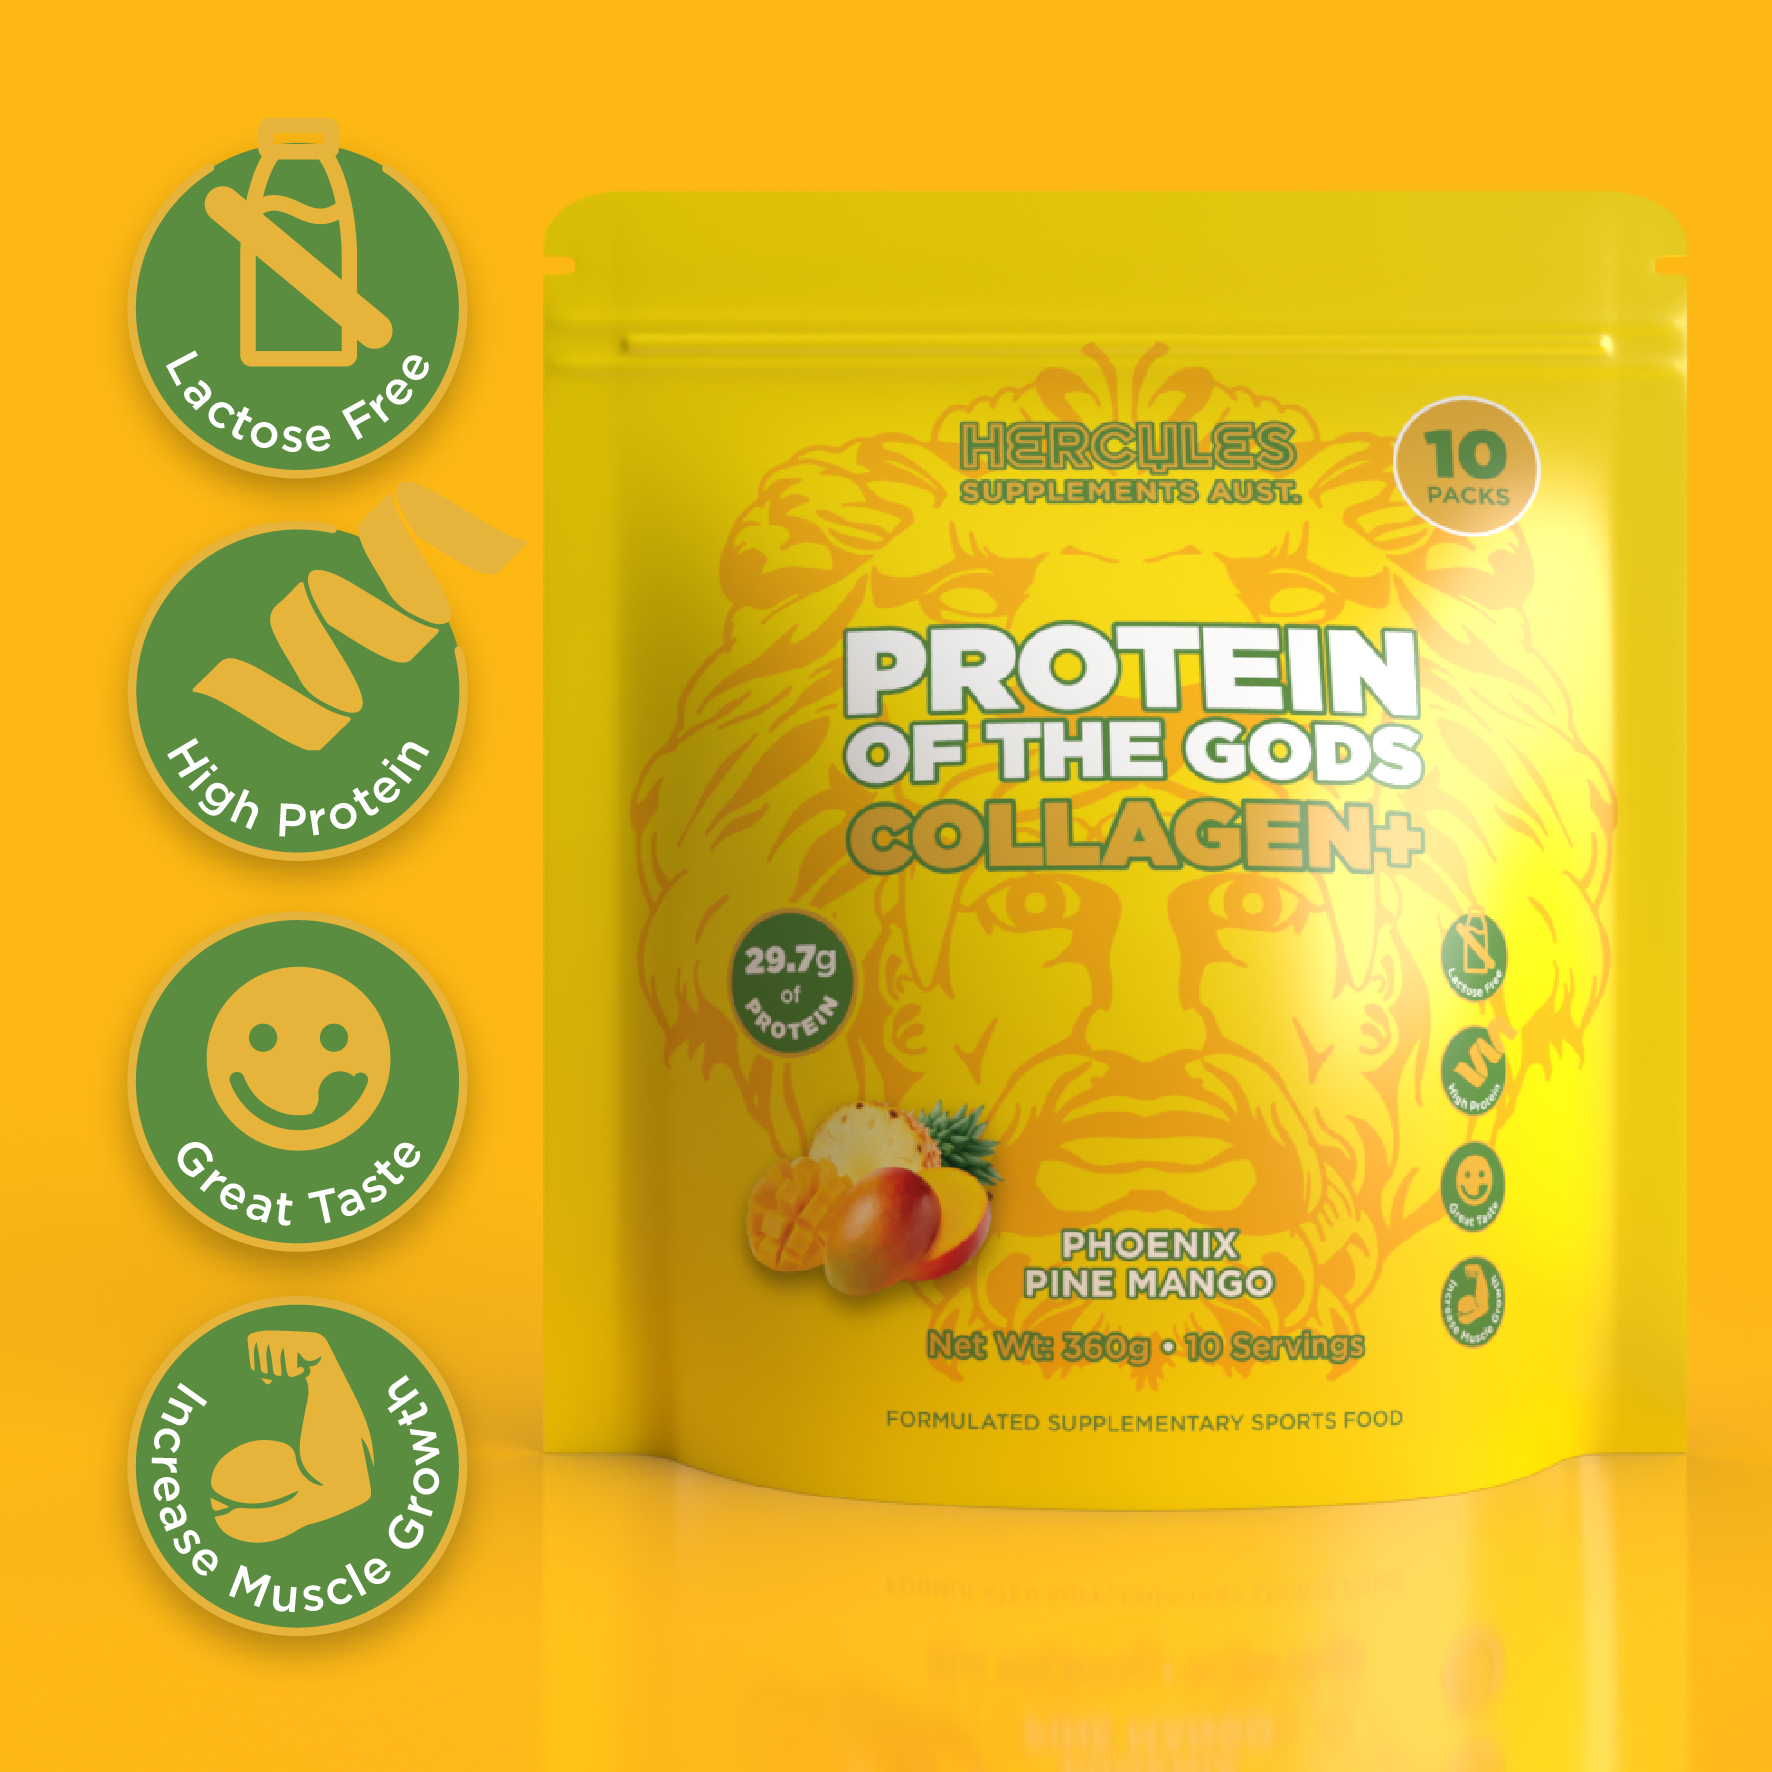 Protein of the Gods Collagen Plus - Phoenix Pine Mango - 10 pack